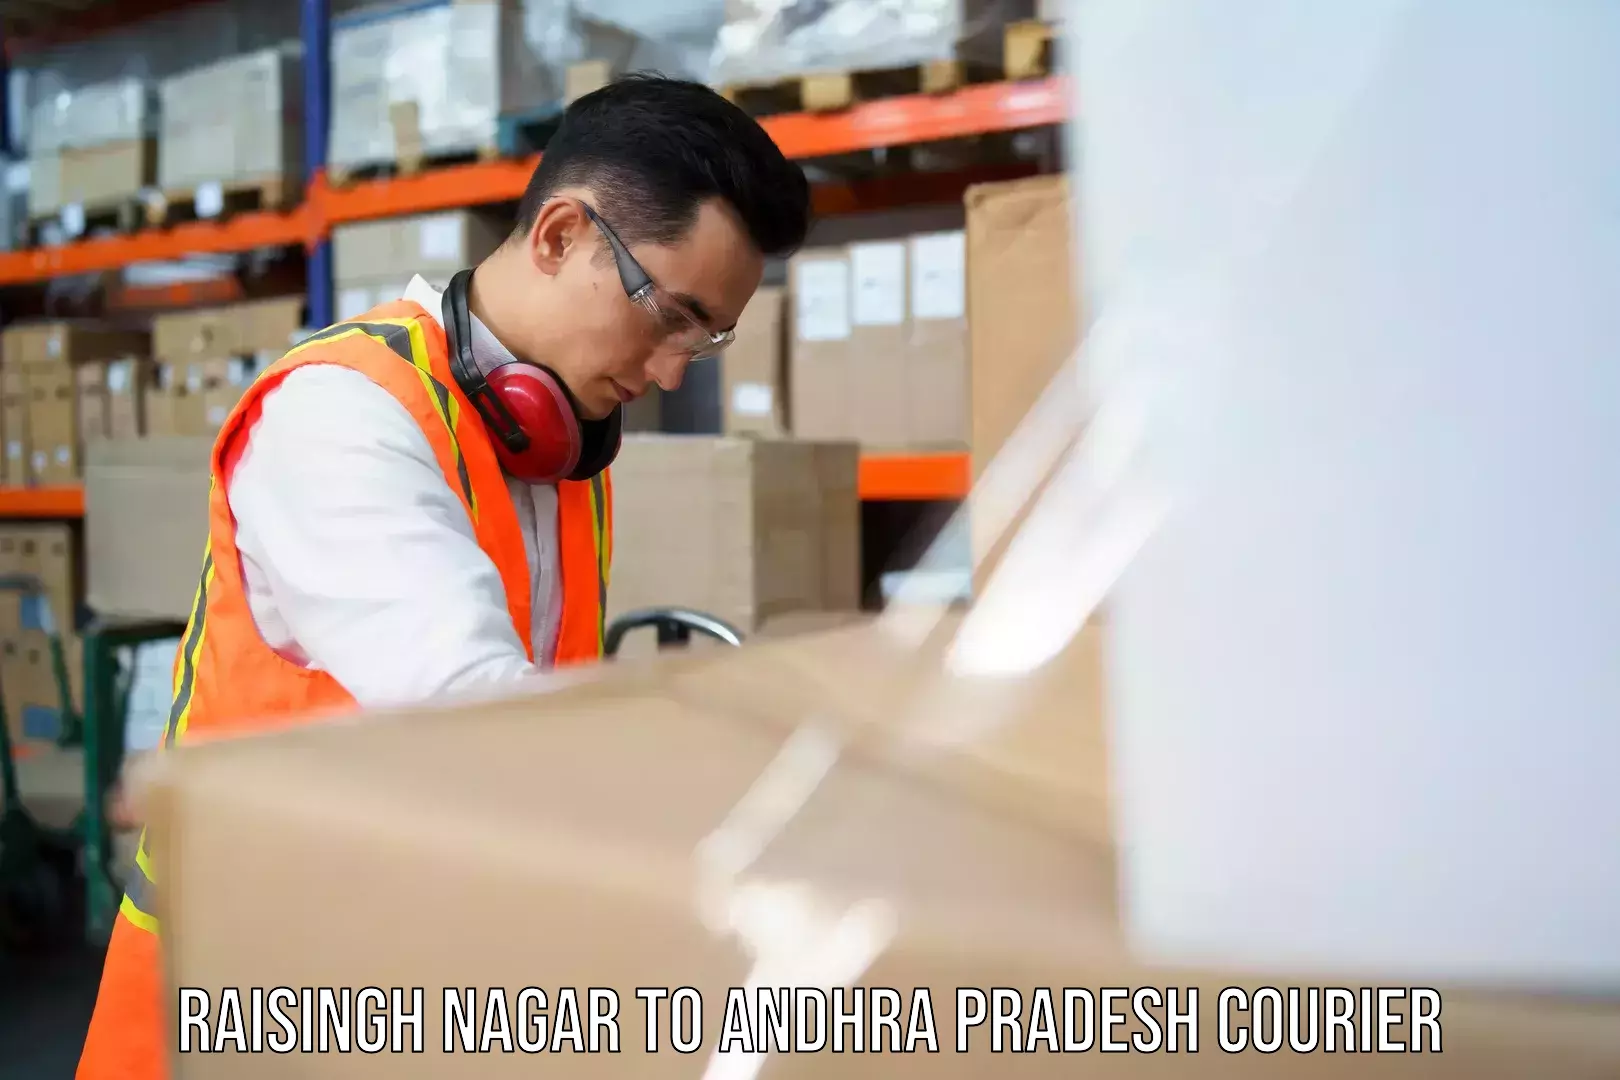 State-of-the-art courier technology Raisingh Nagar to Udayagiri